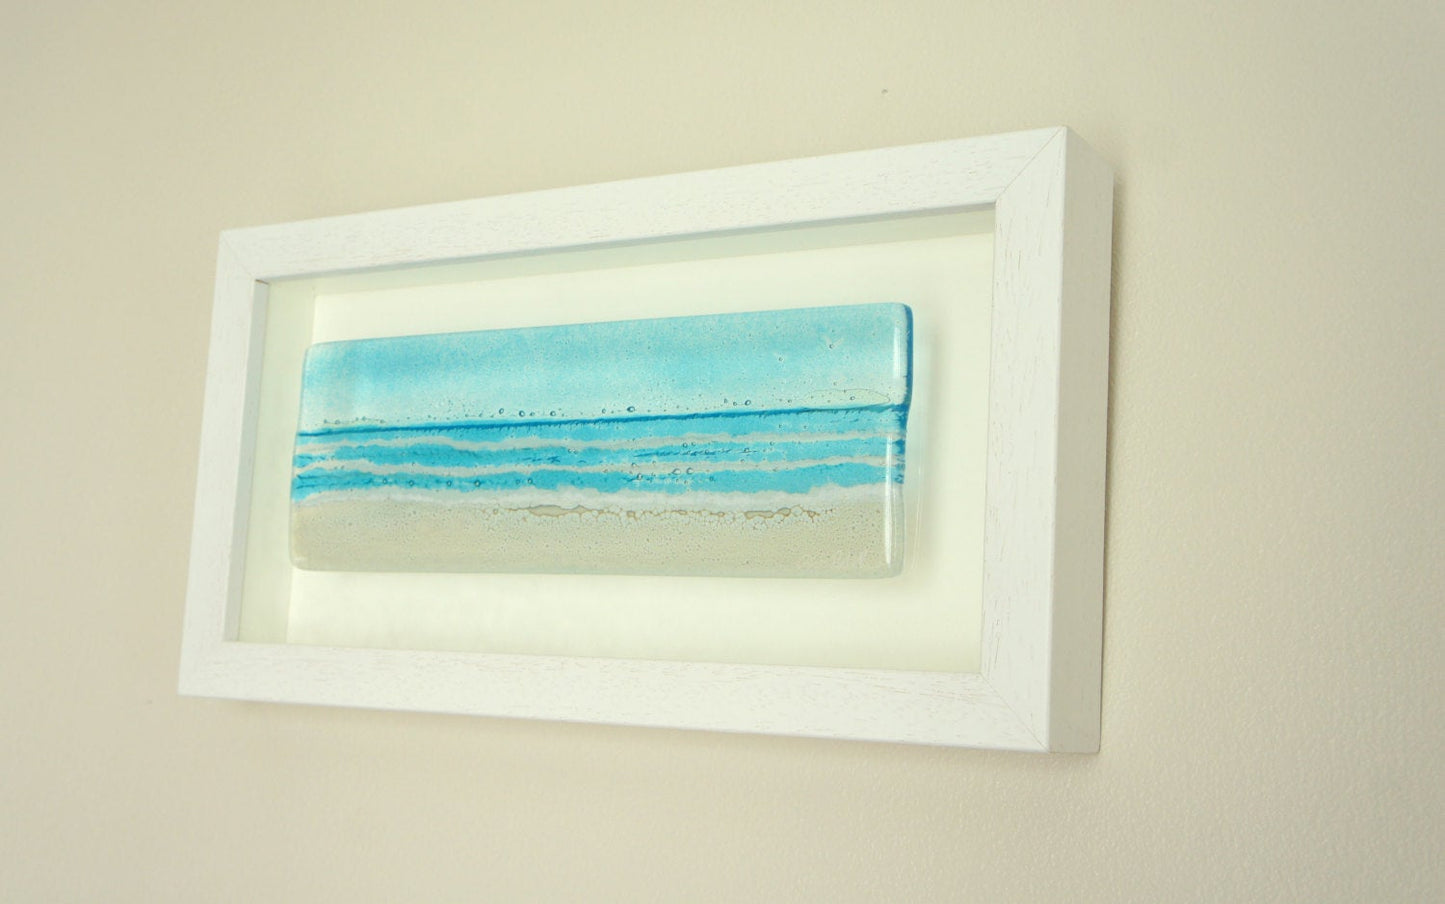 Beach Frame - Landscape - Turquoise - 34cmx18cm (13 3/8"x7")